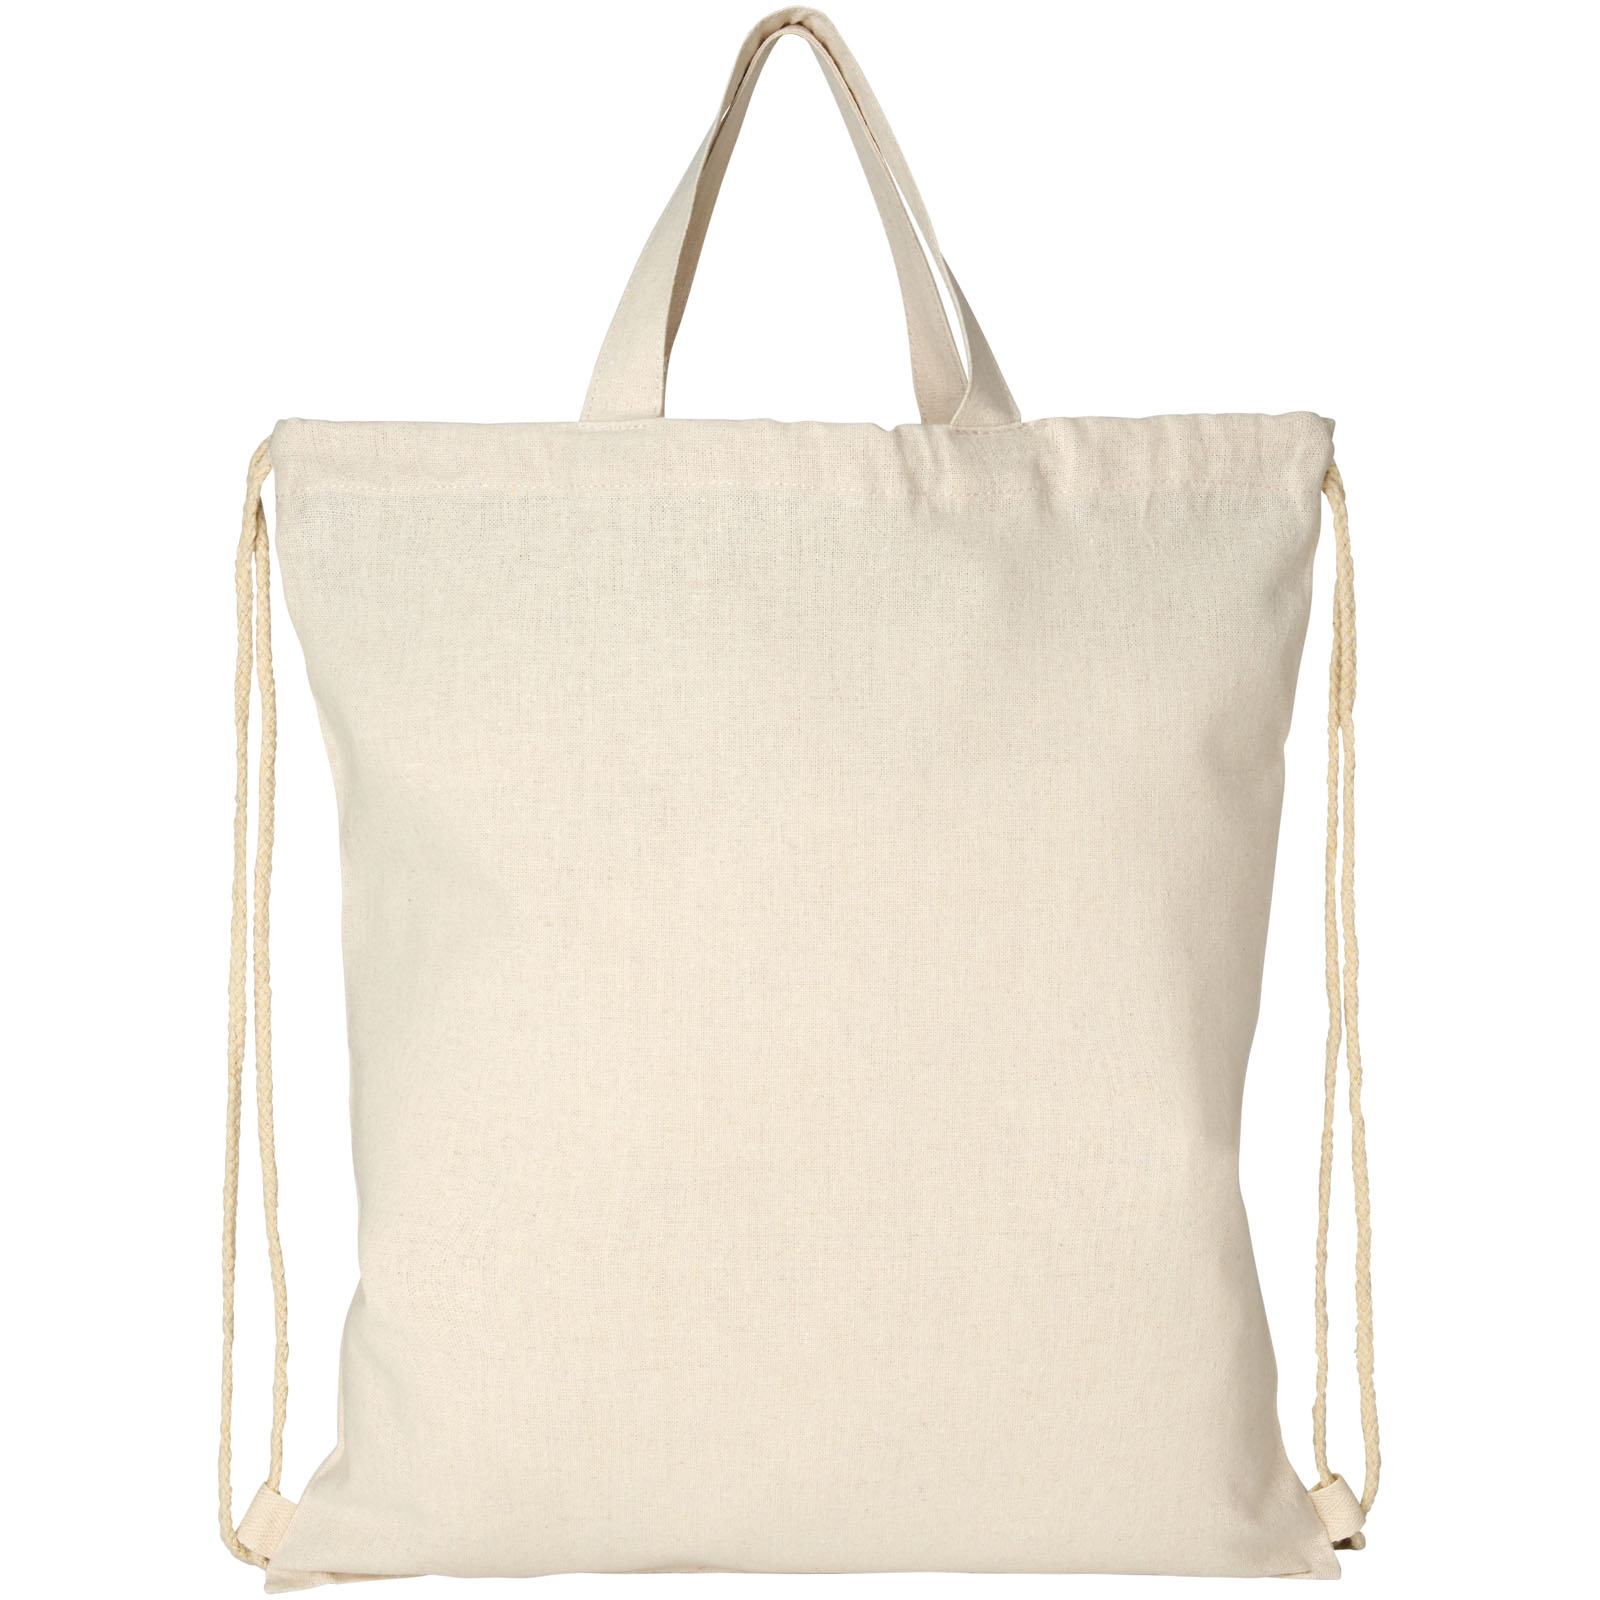 Advertising Drawstring Bags - Pheebs 210 g/m² recycled drawstring bag 6L - 1